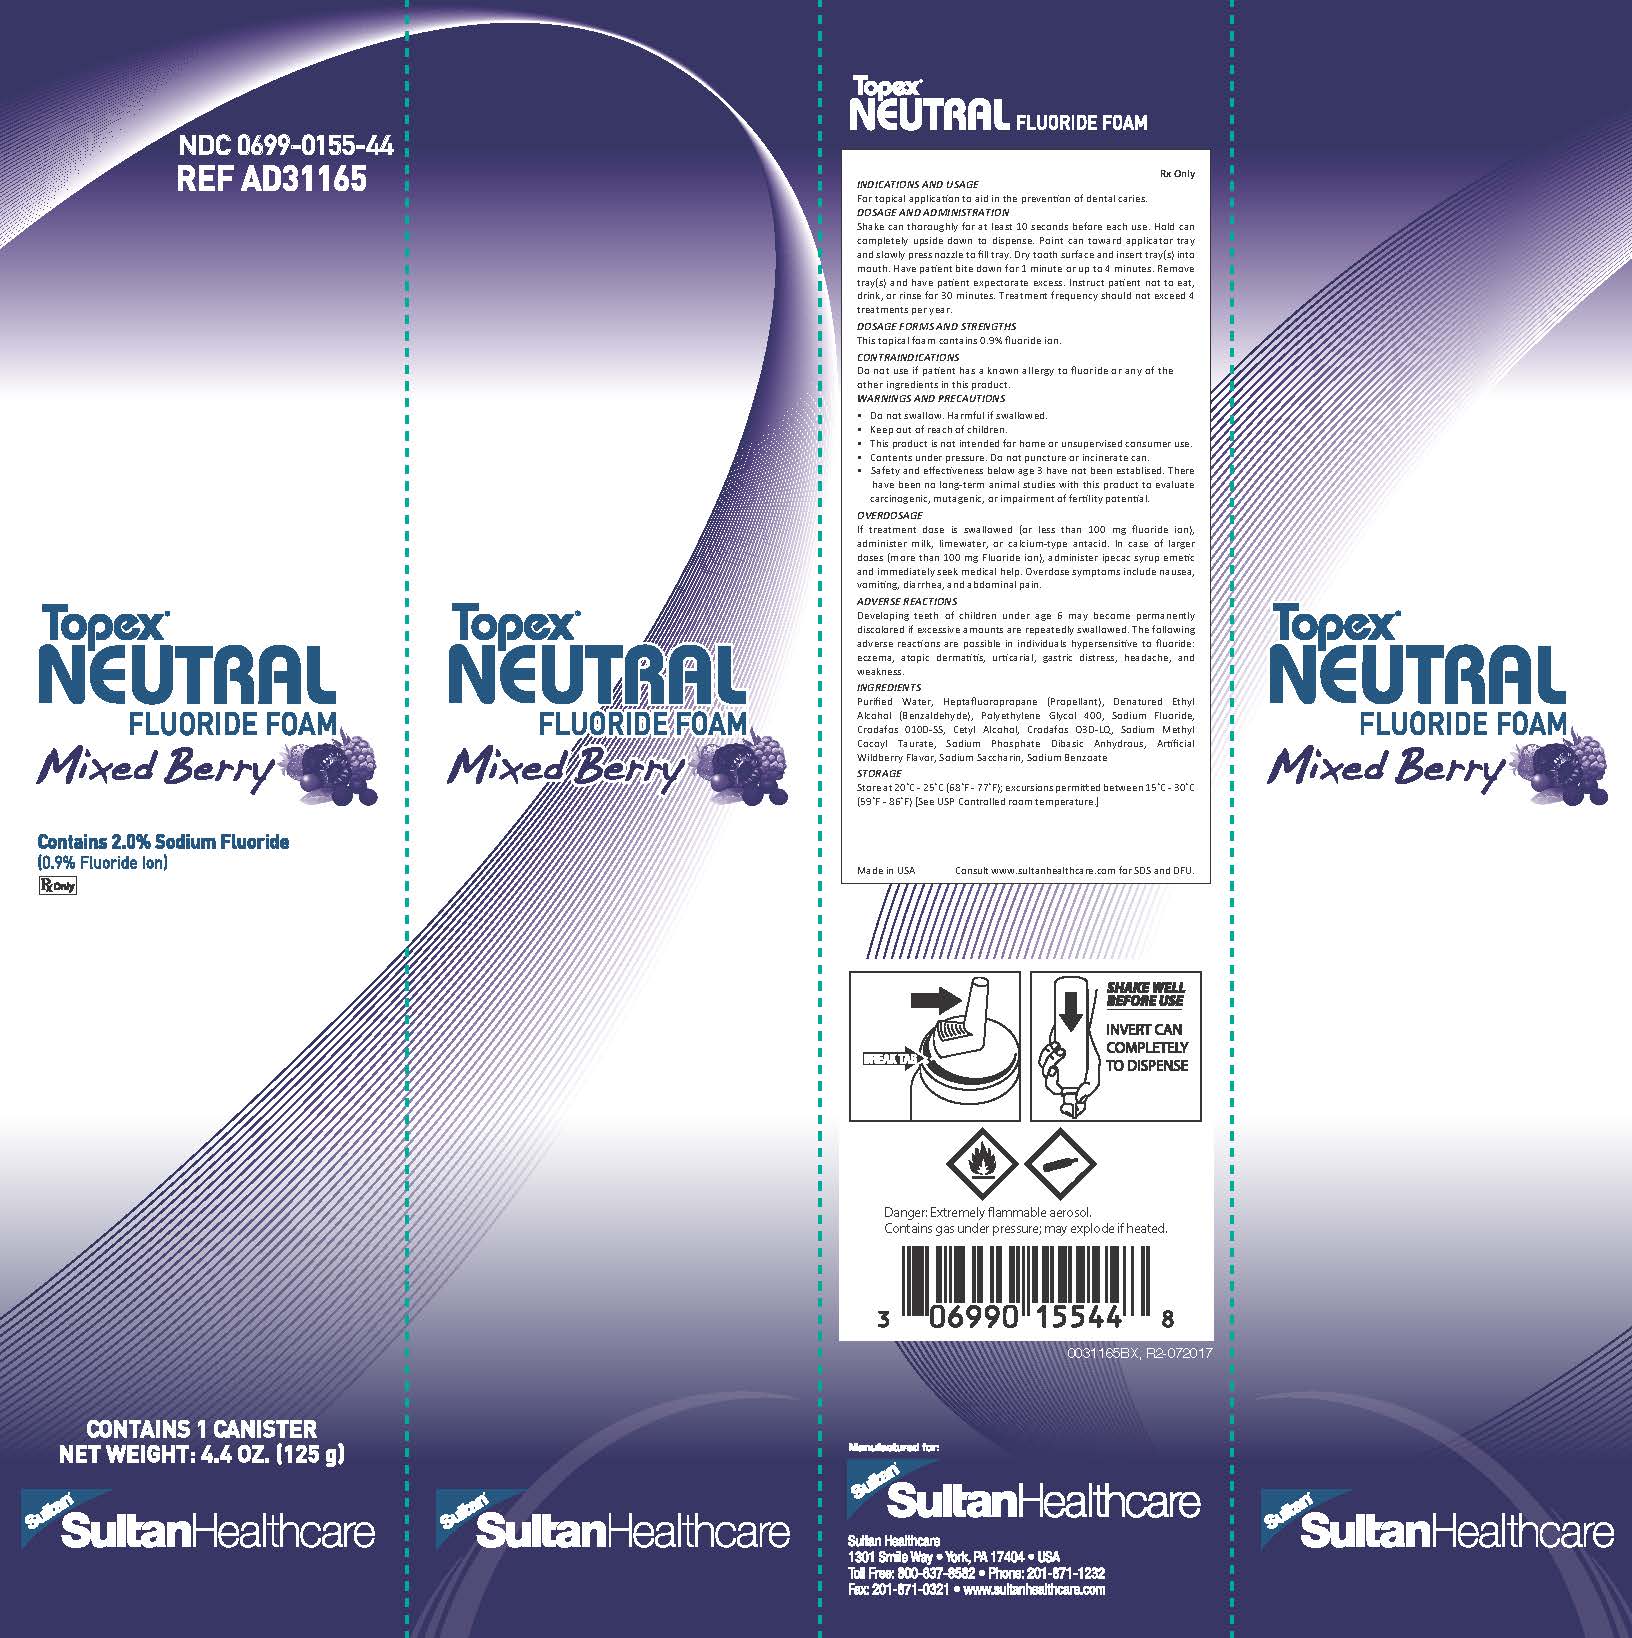 Topex Neutral Fluoride Foam | Sodium Fluoride Aerosol, Foam while Breastfeeding